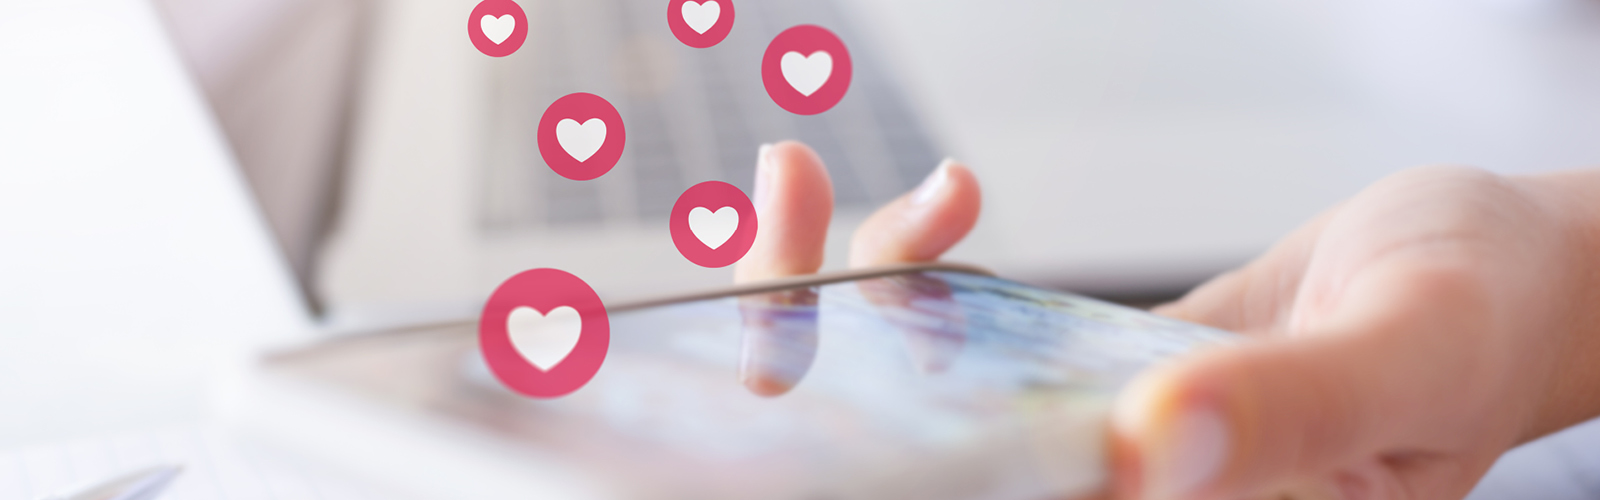 Visual Social Marketing: Instagram or Pinterest?